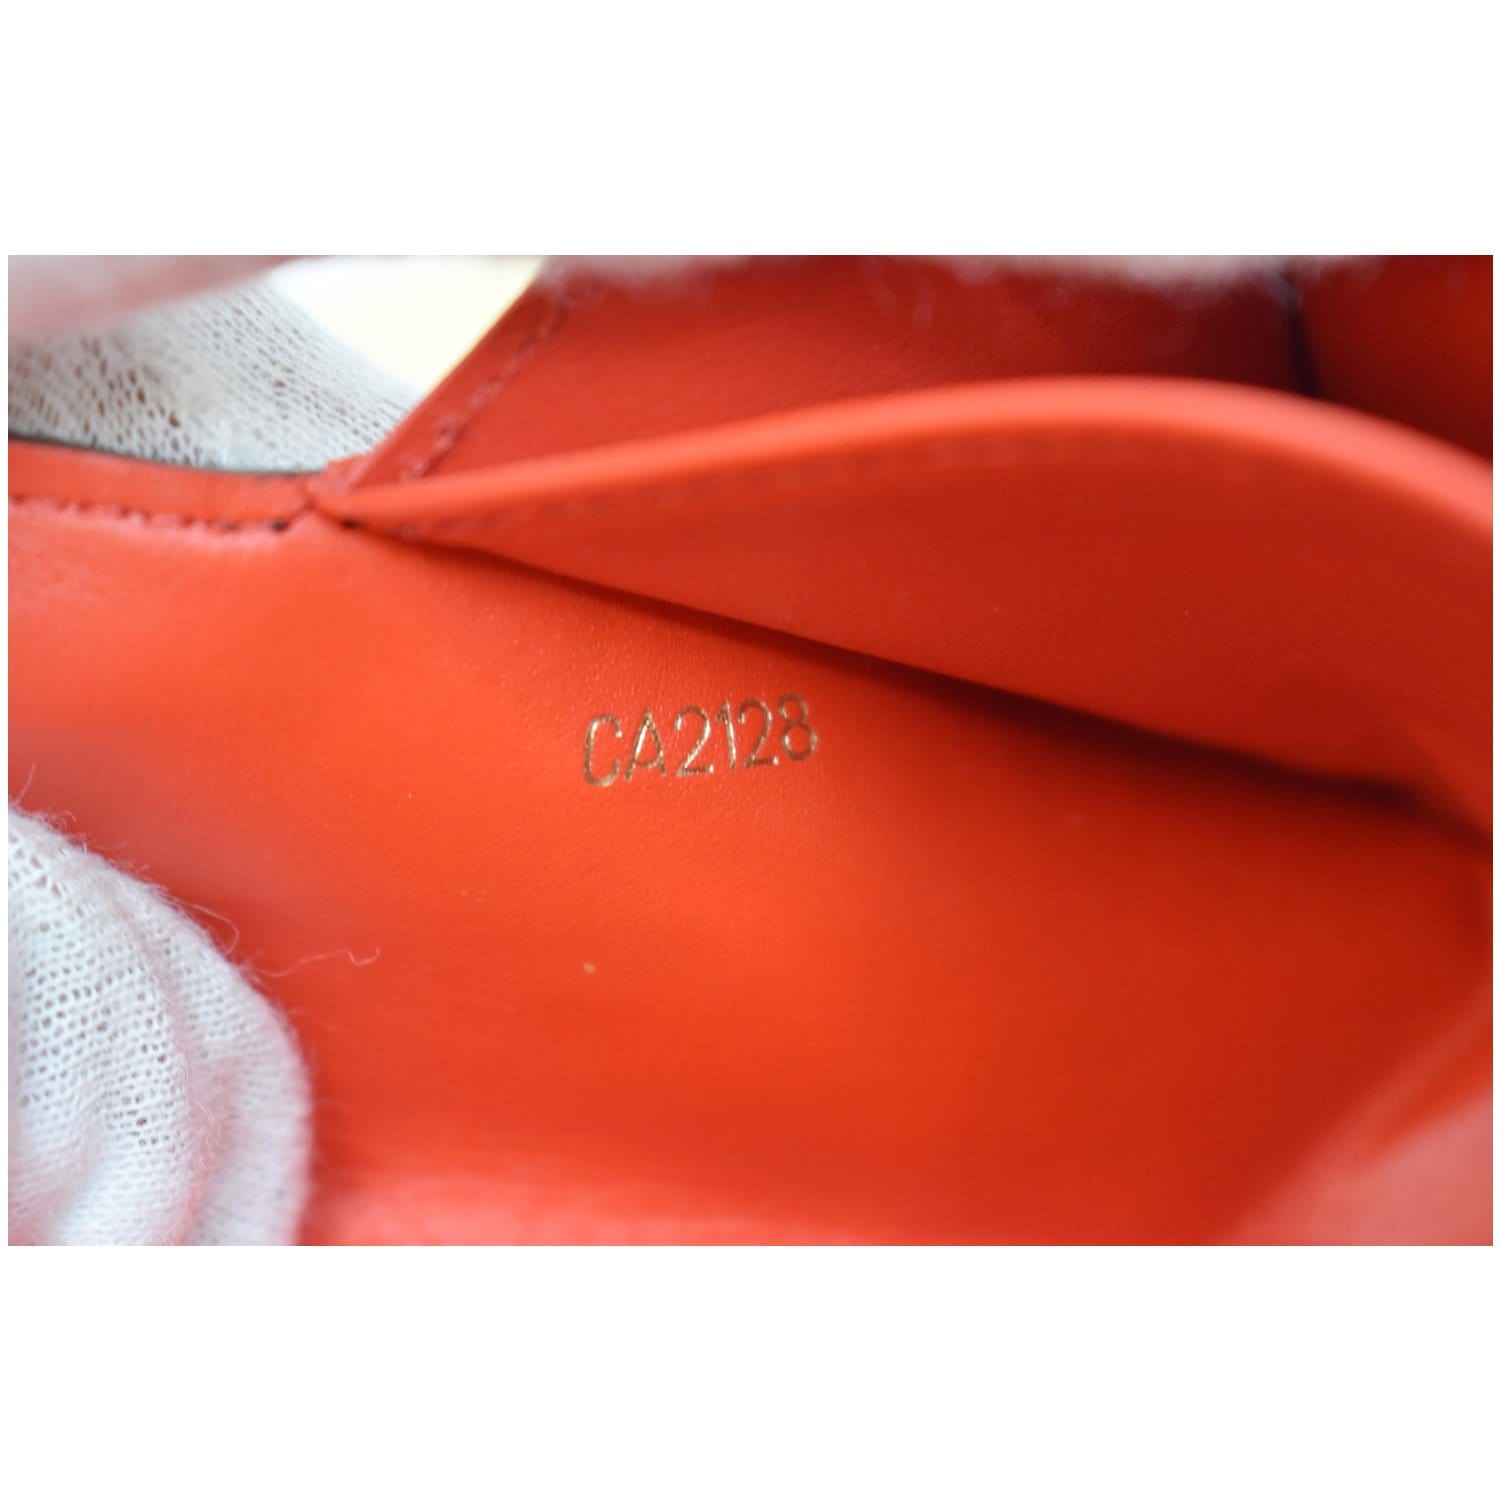 RvceShops Revival  Red Louis Vuitton Monogram Flore Wallet On